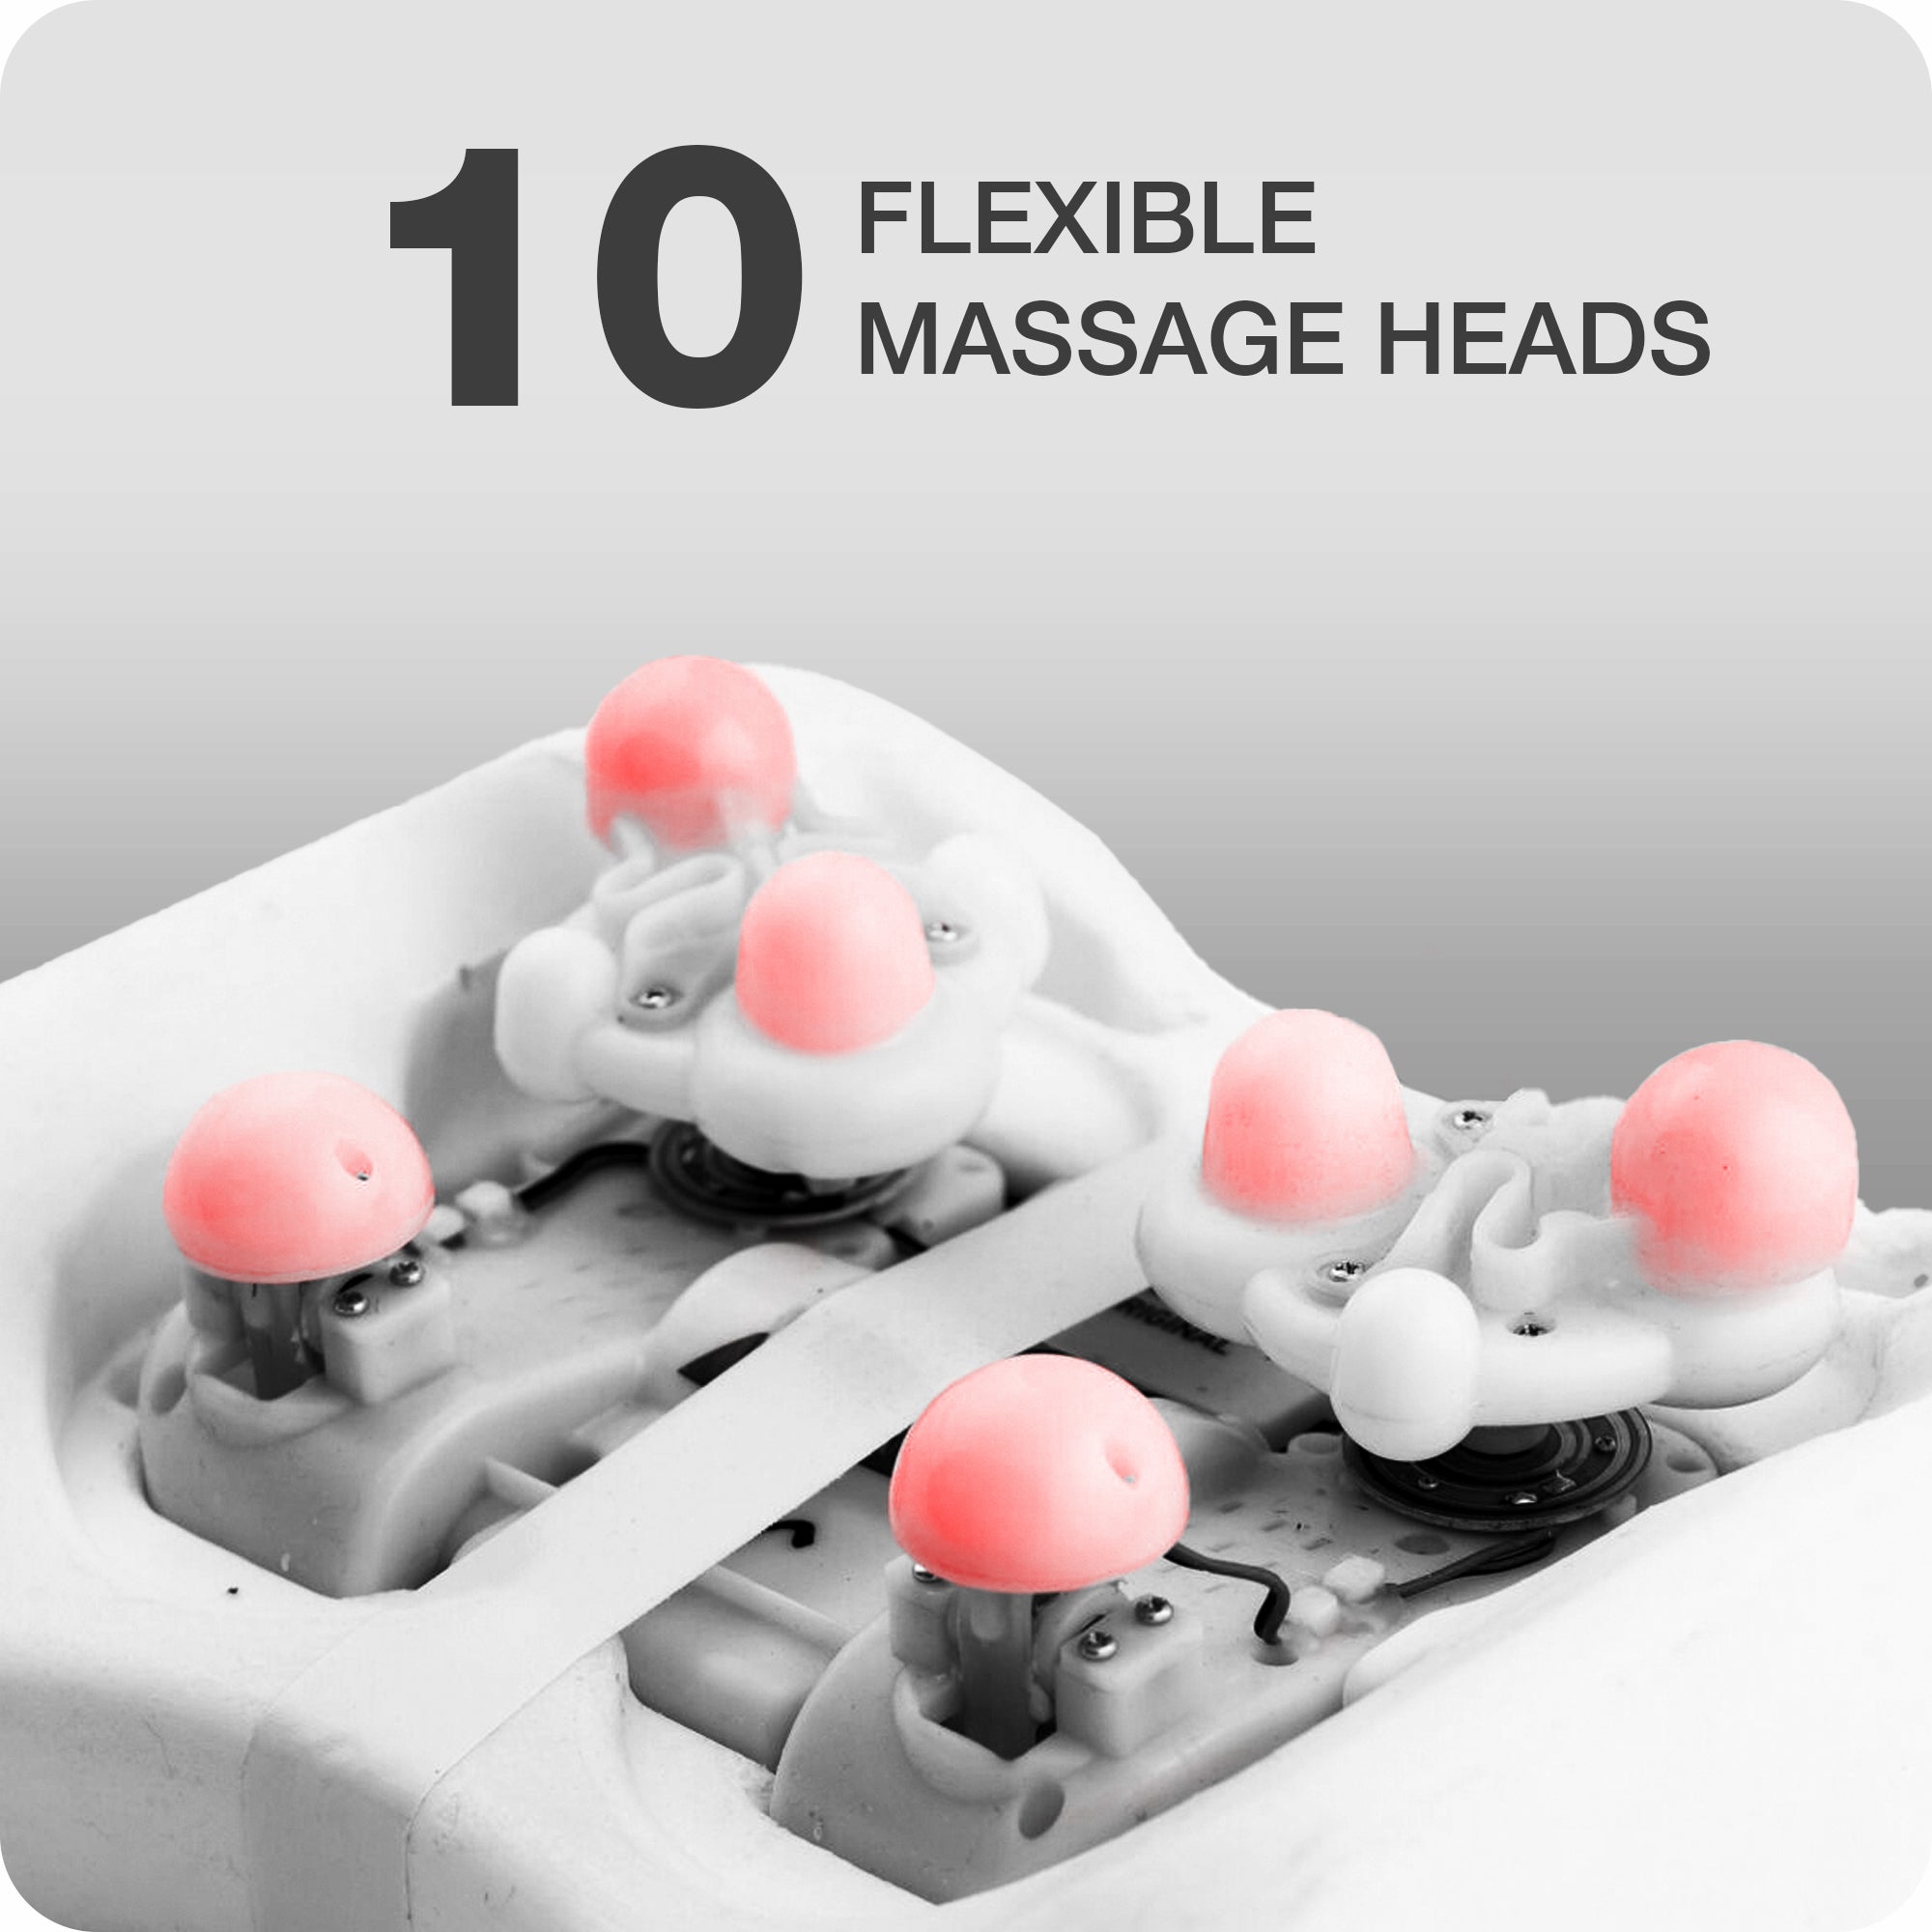 10 flexible massage heads made of soft plastic